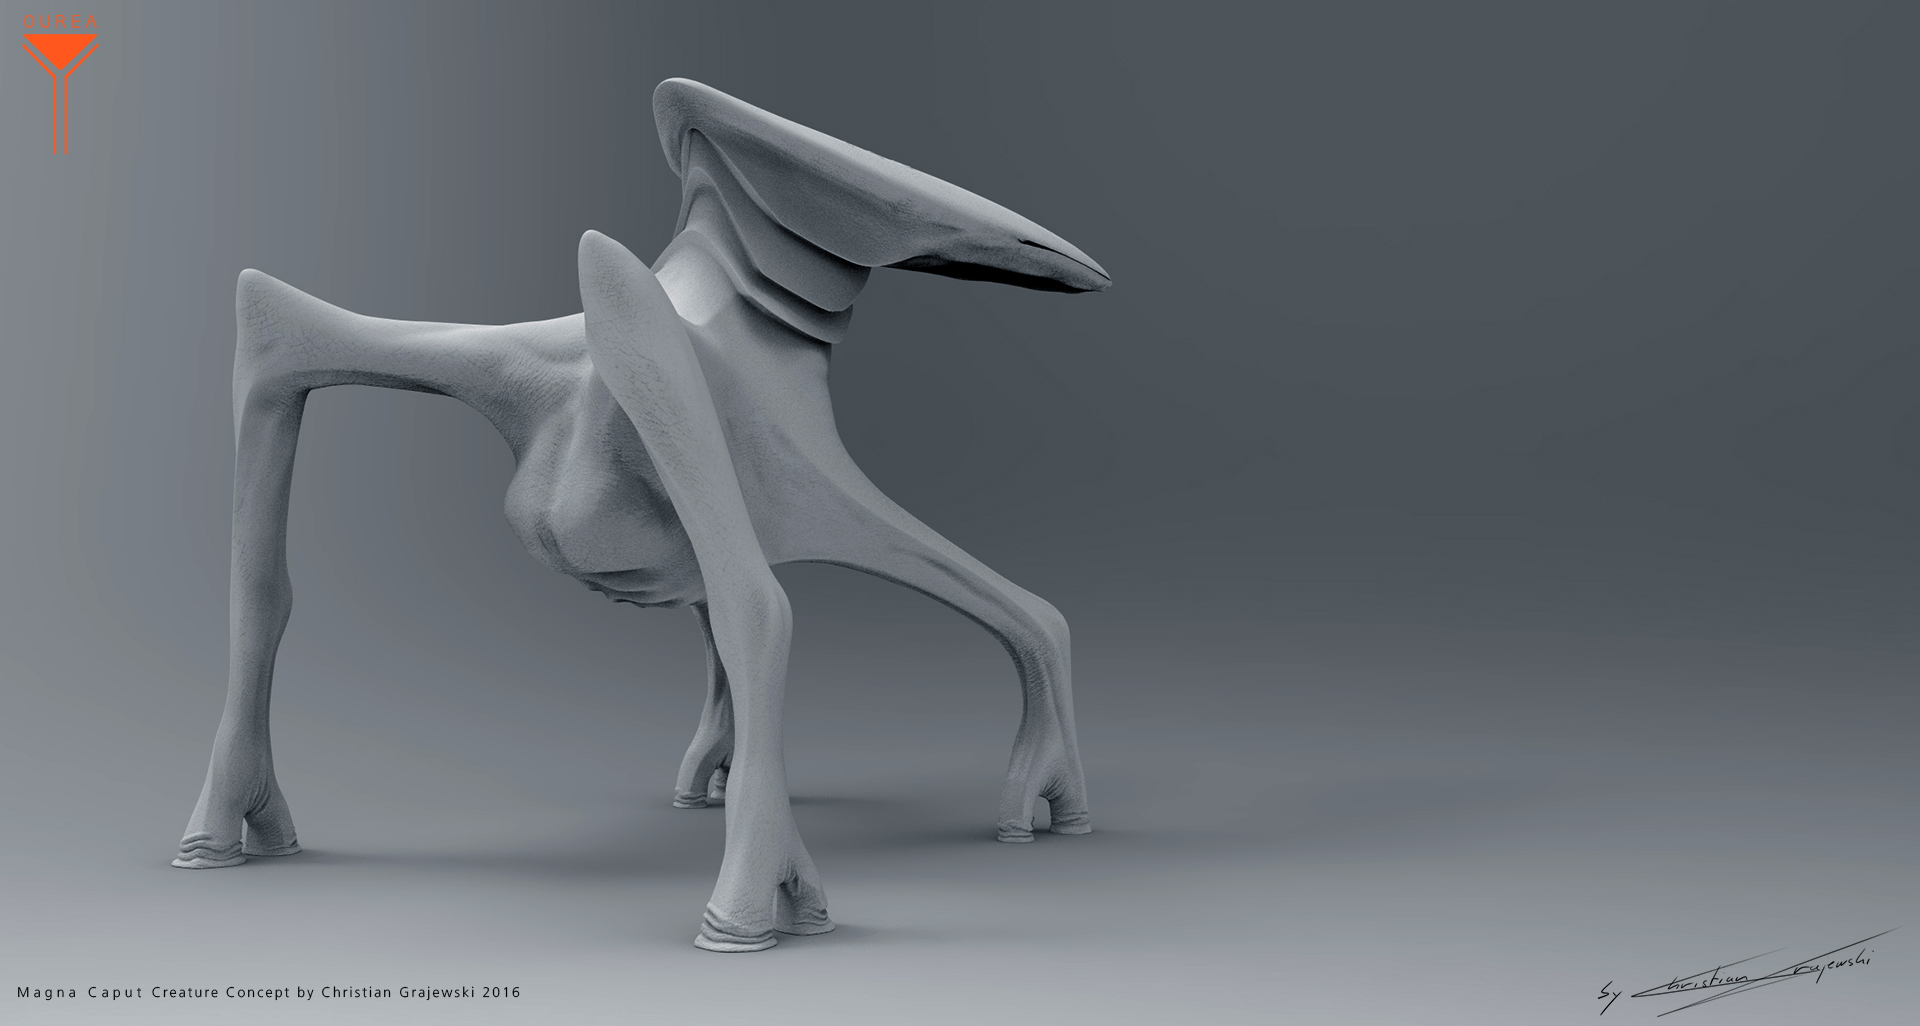 The Magna Caput Creature Concept 03 by Christian Grajewski.jpg